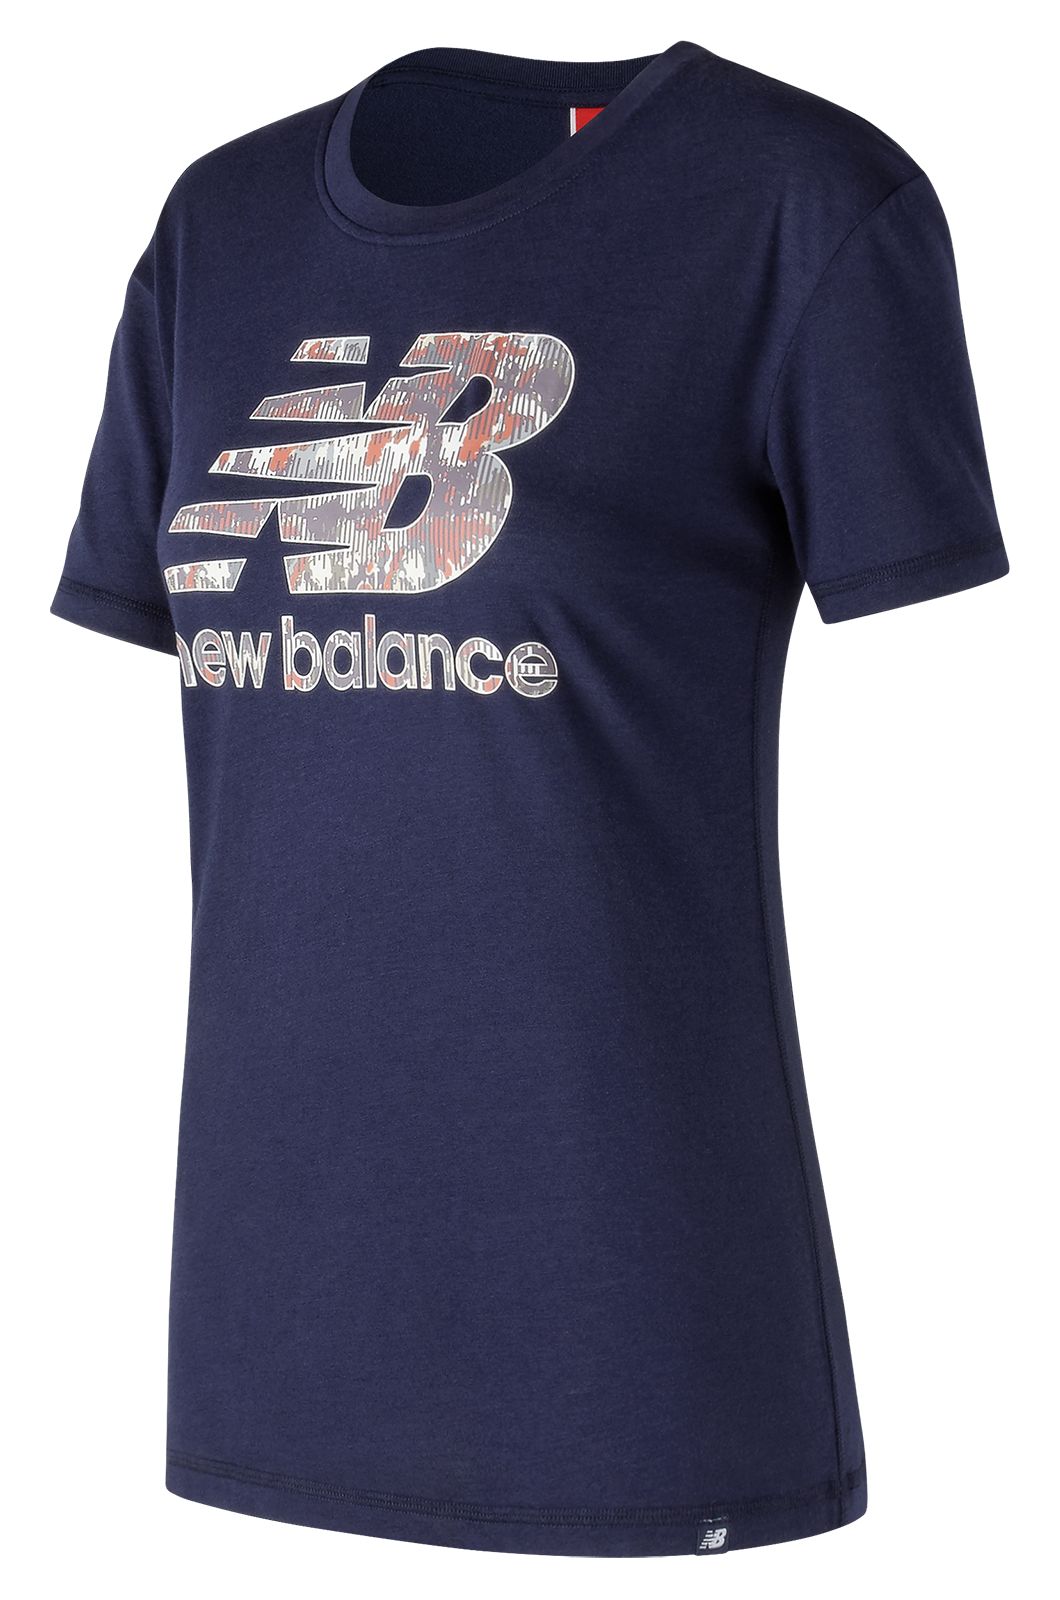 NB Logo Tee - Women's 73504 - Tops, Lifestyle - New Balance